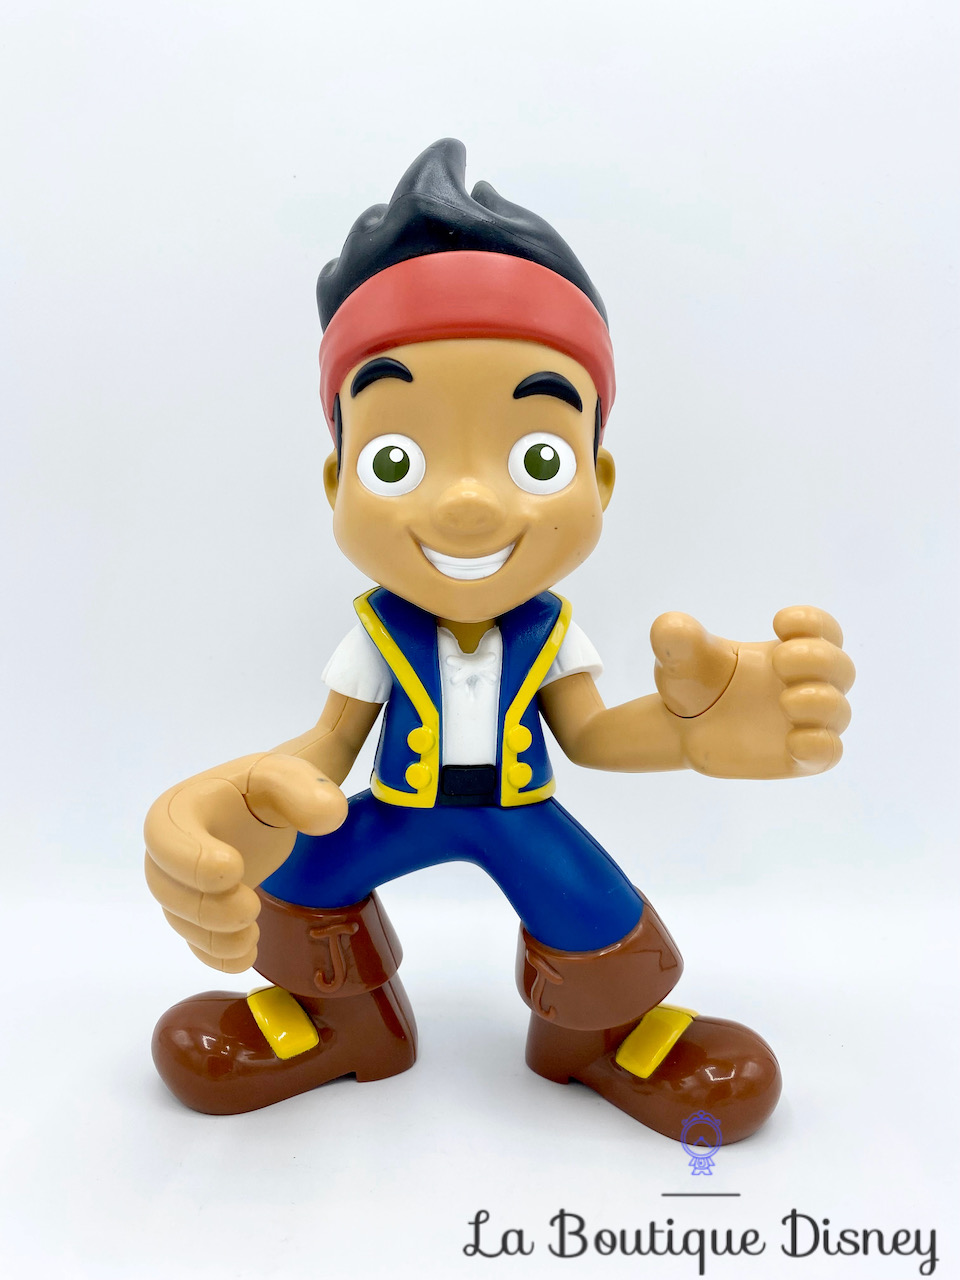 Jouet Figurine parlante Jake et les Pirates Disney Fisher Price Mattel 2011 interactive 24 cm